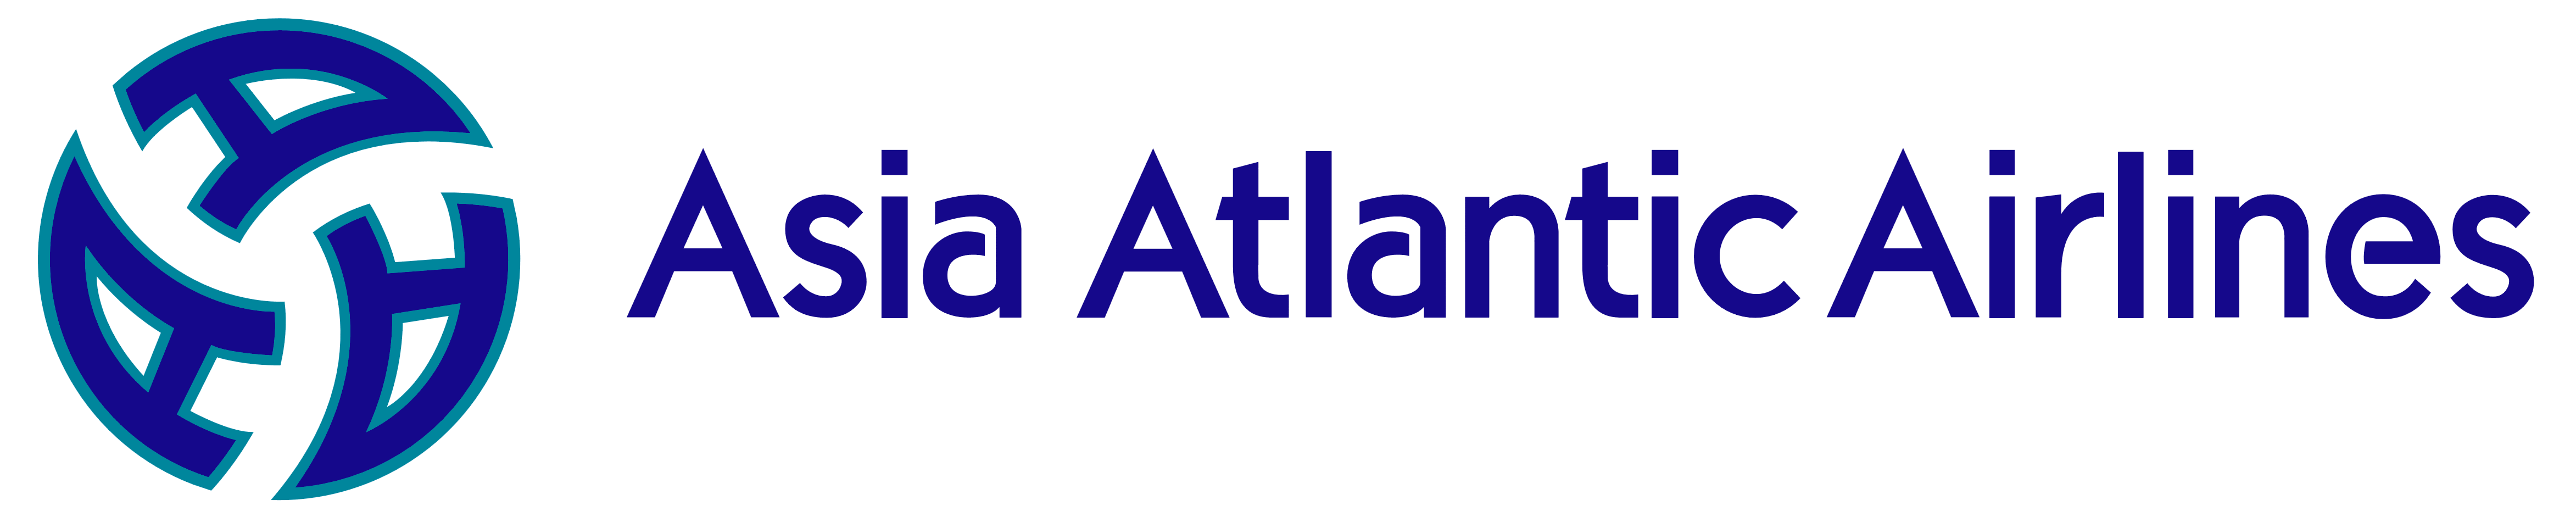 Asia Airlines Logo - Asia Atlantic Airlines – Logos Download